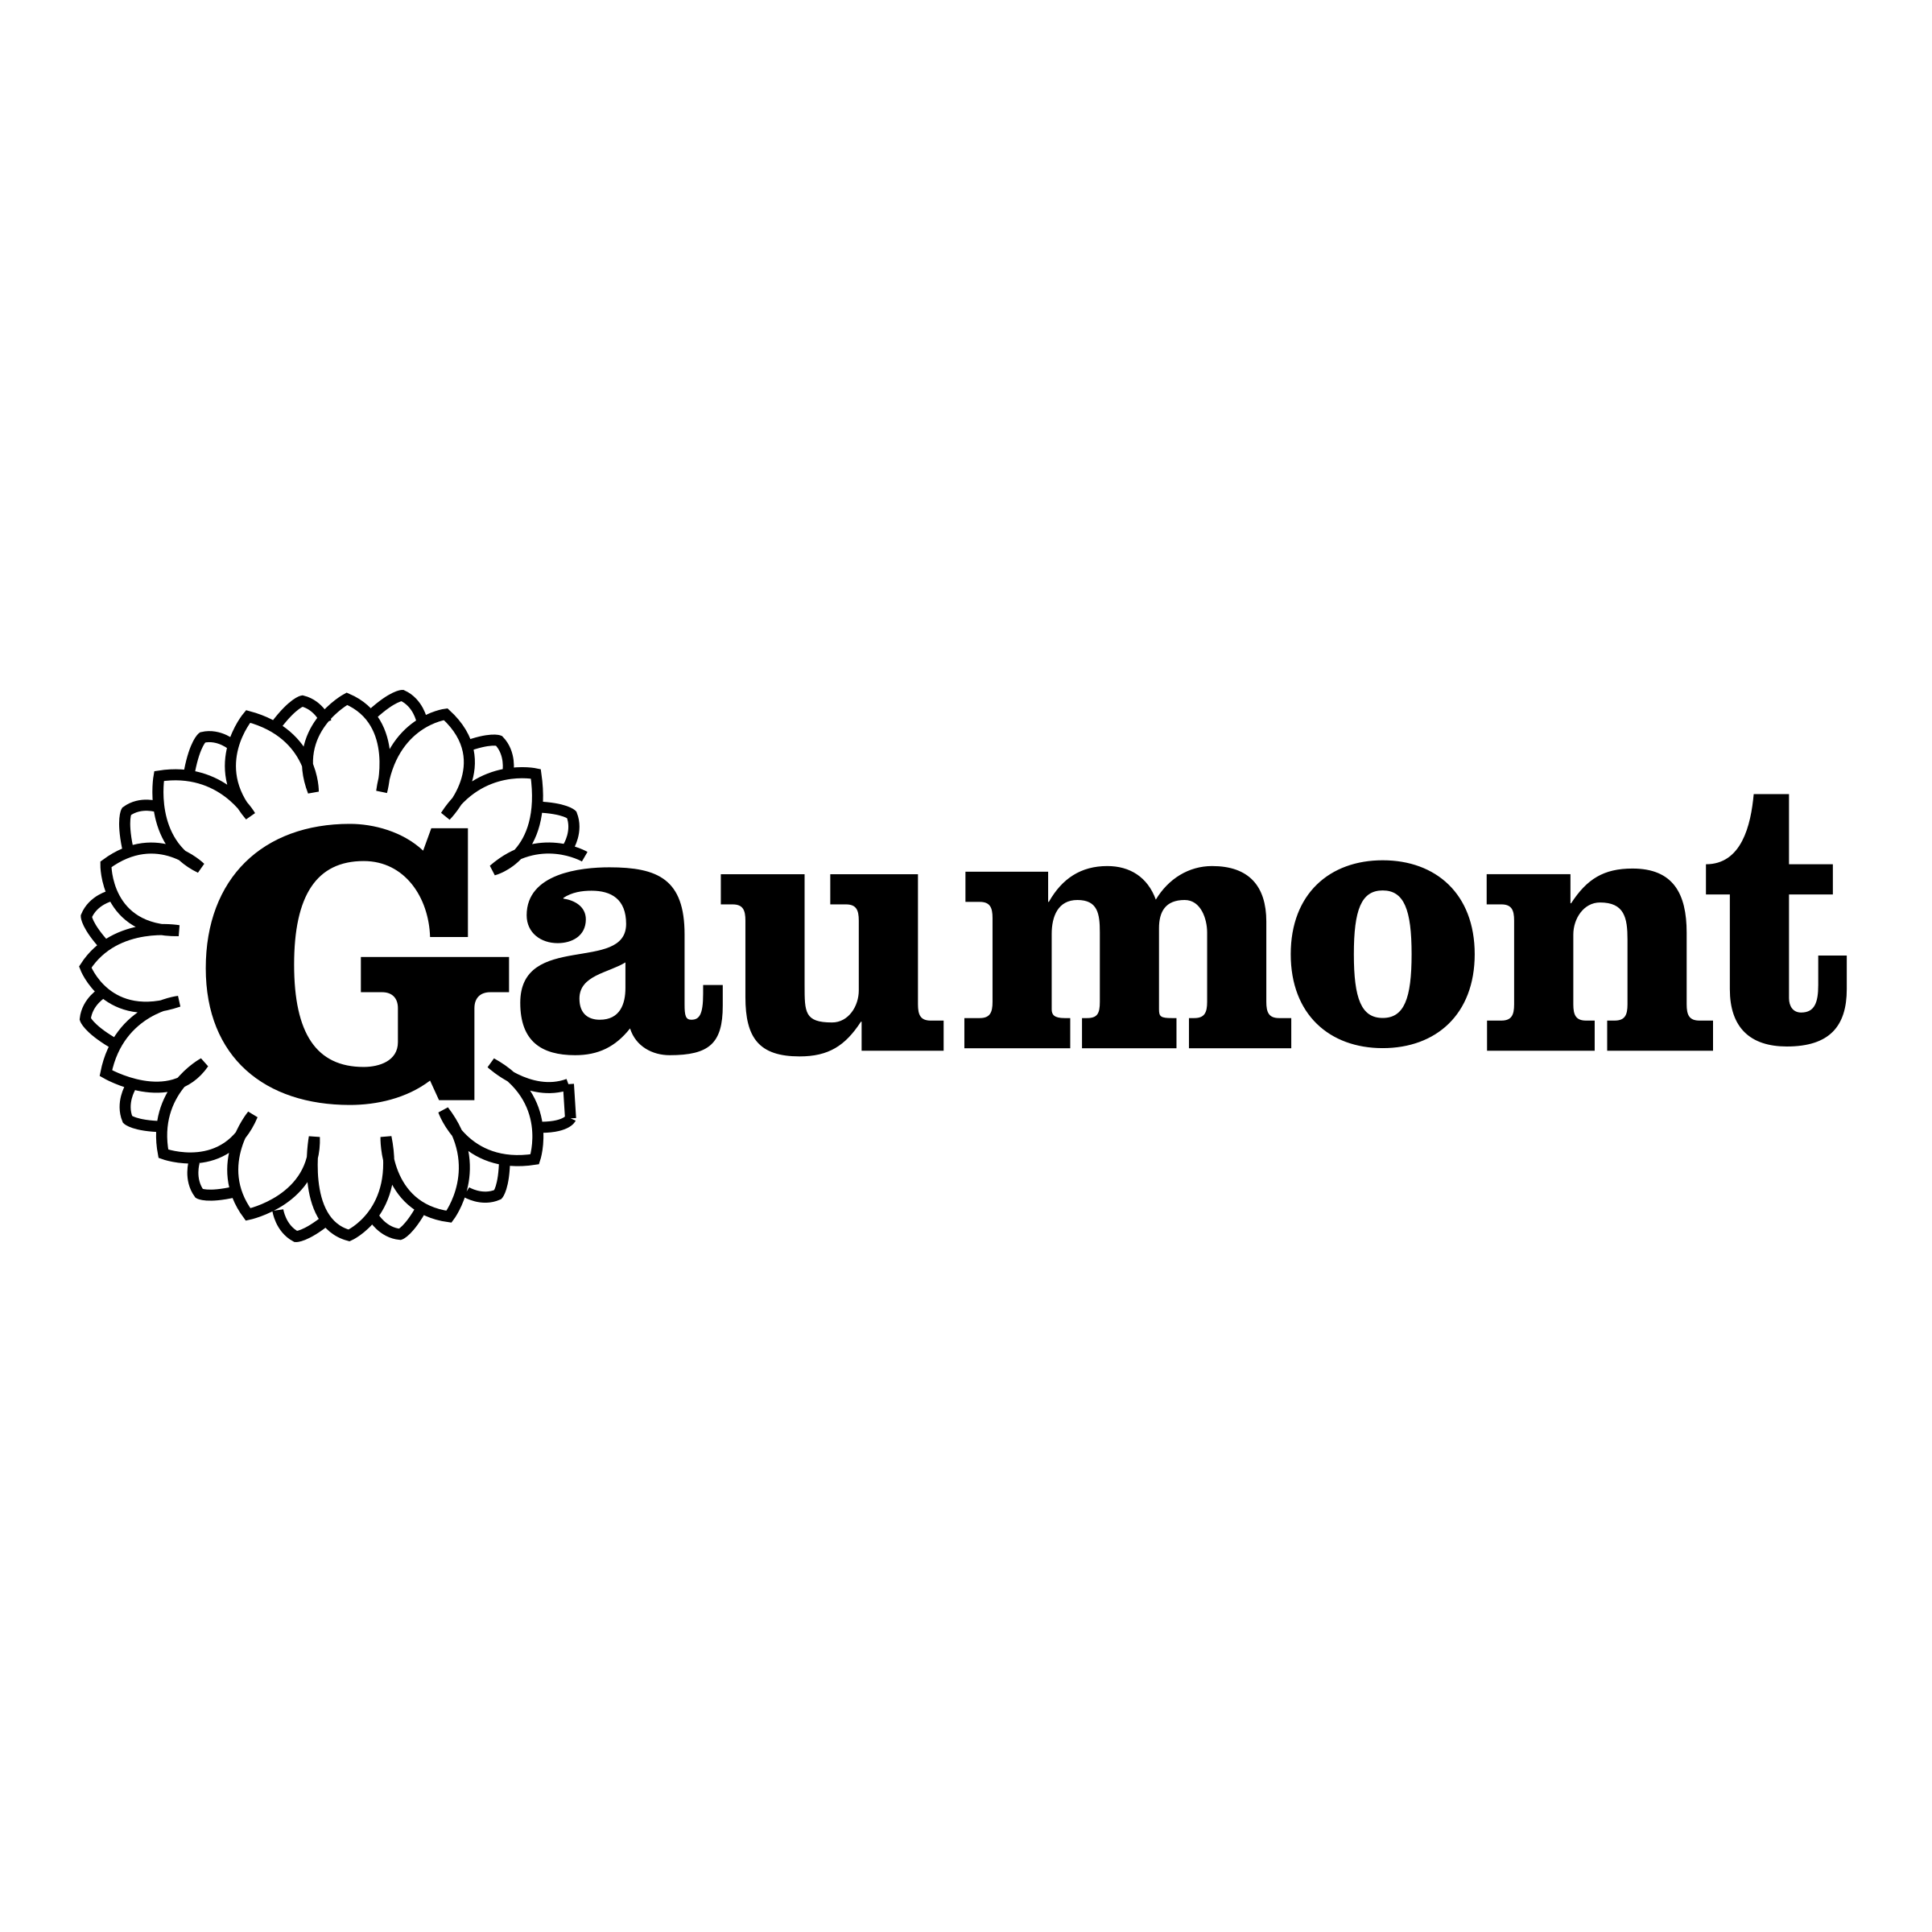 Gaumont Logo - Gaumont Logo PNG Transparent & SVG Vector - Freebie Supply